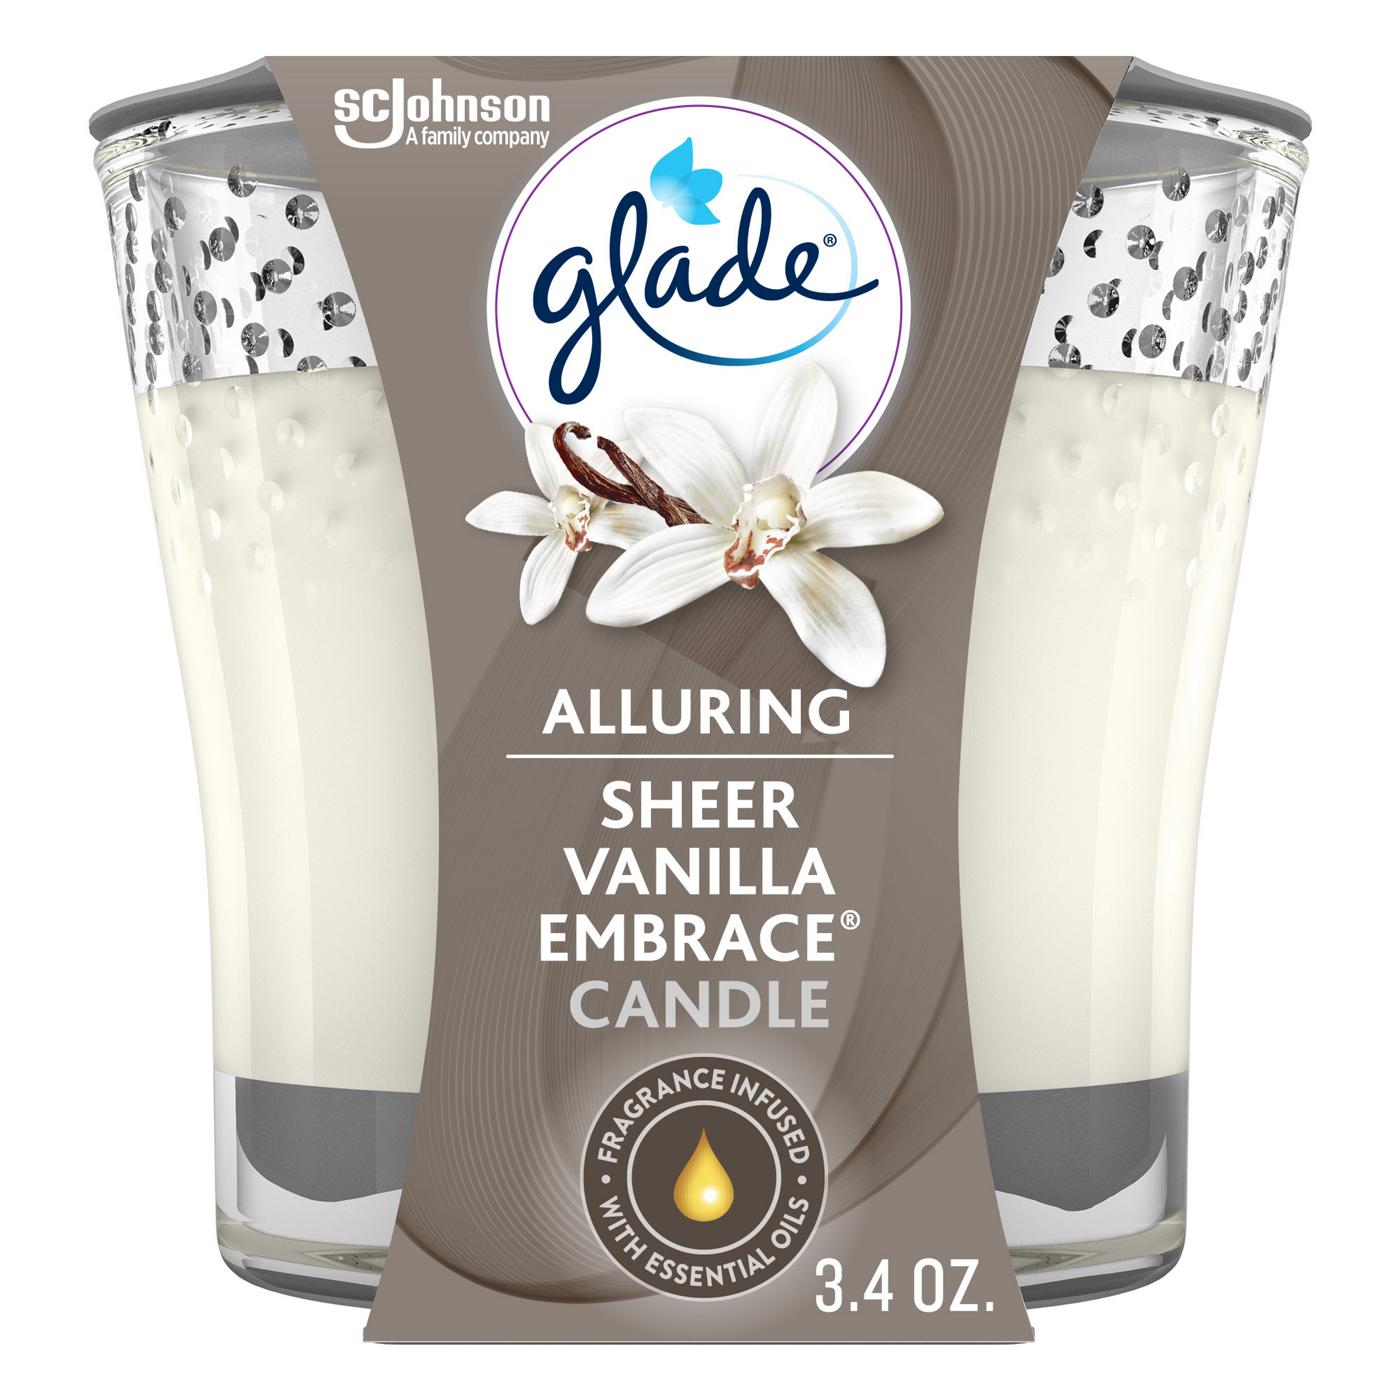 Glade Sheer Vanilla Embrace Candle ; image 1 of 2